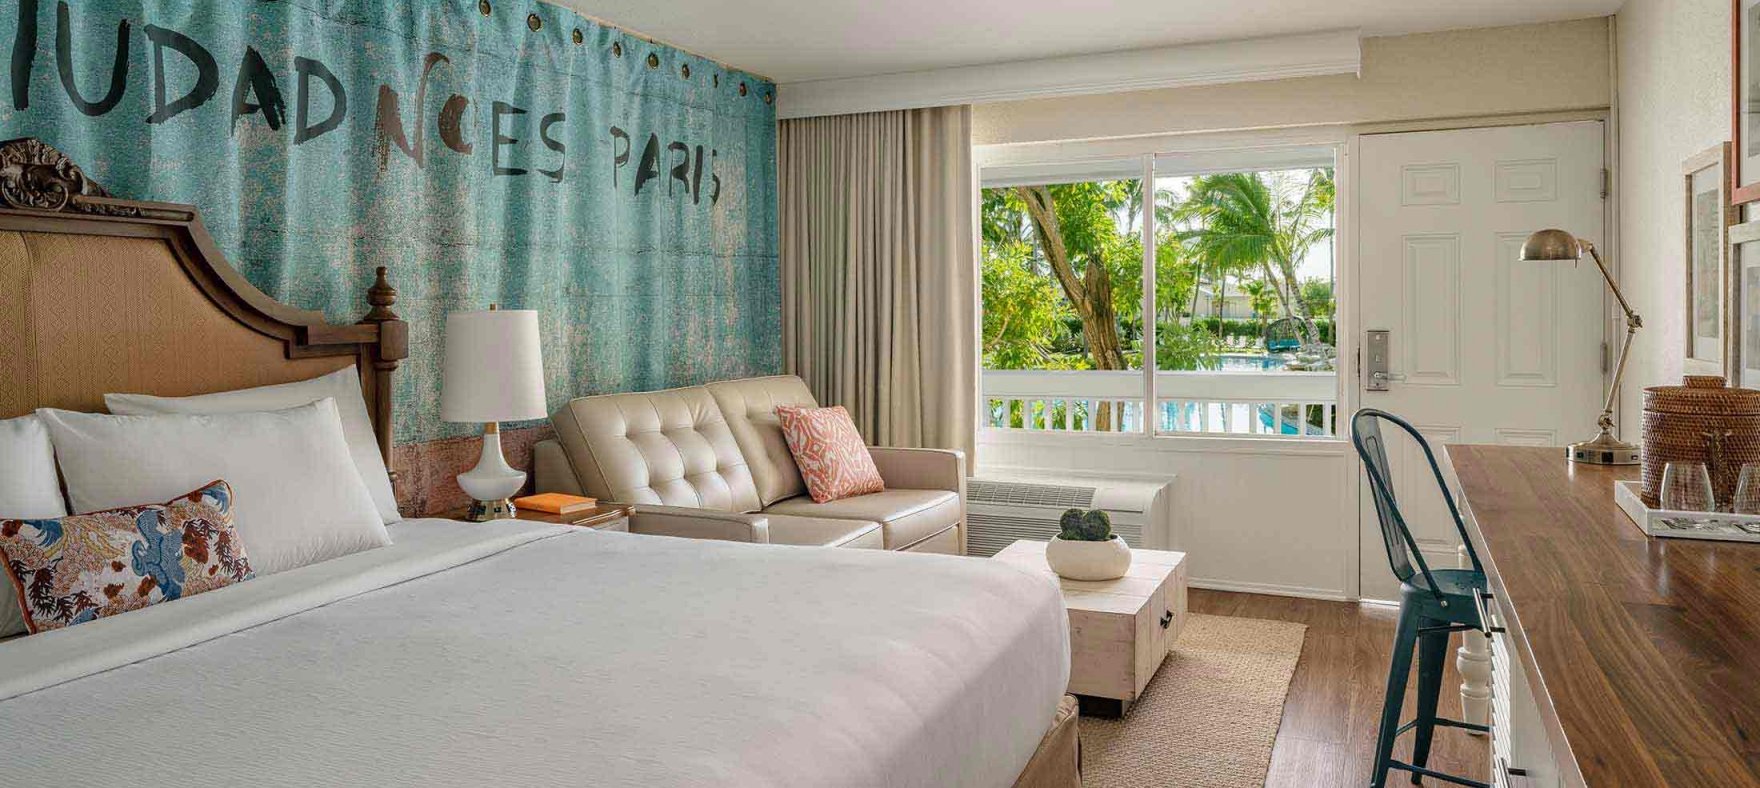 A Havana Cabana poolside view room decor and layout